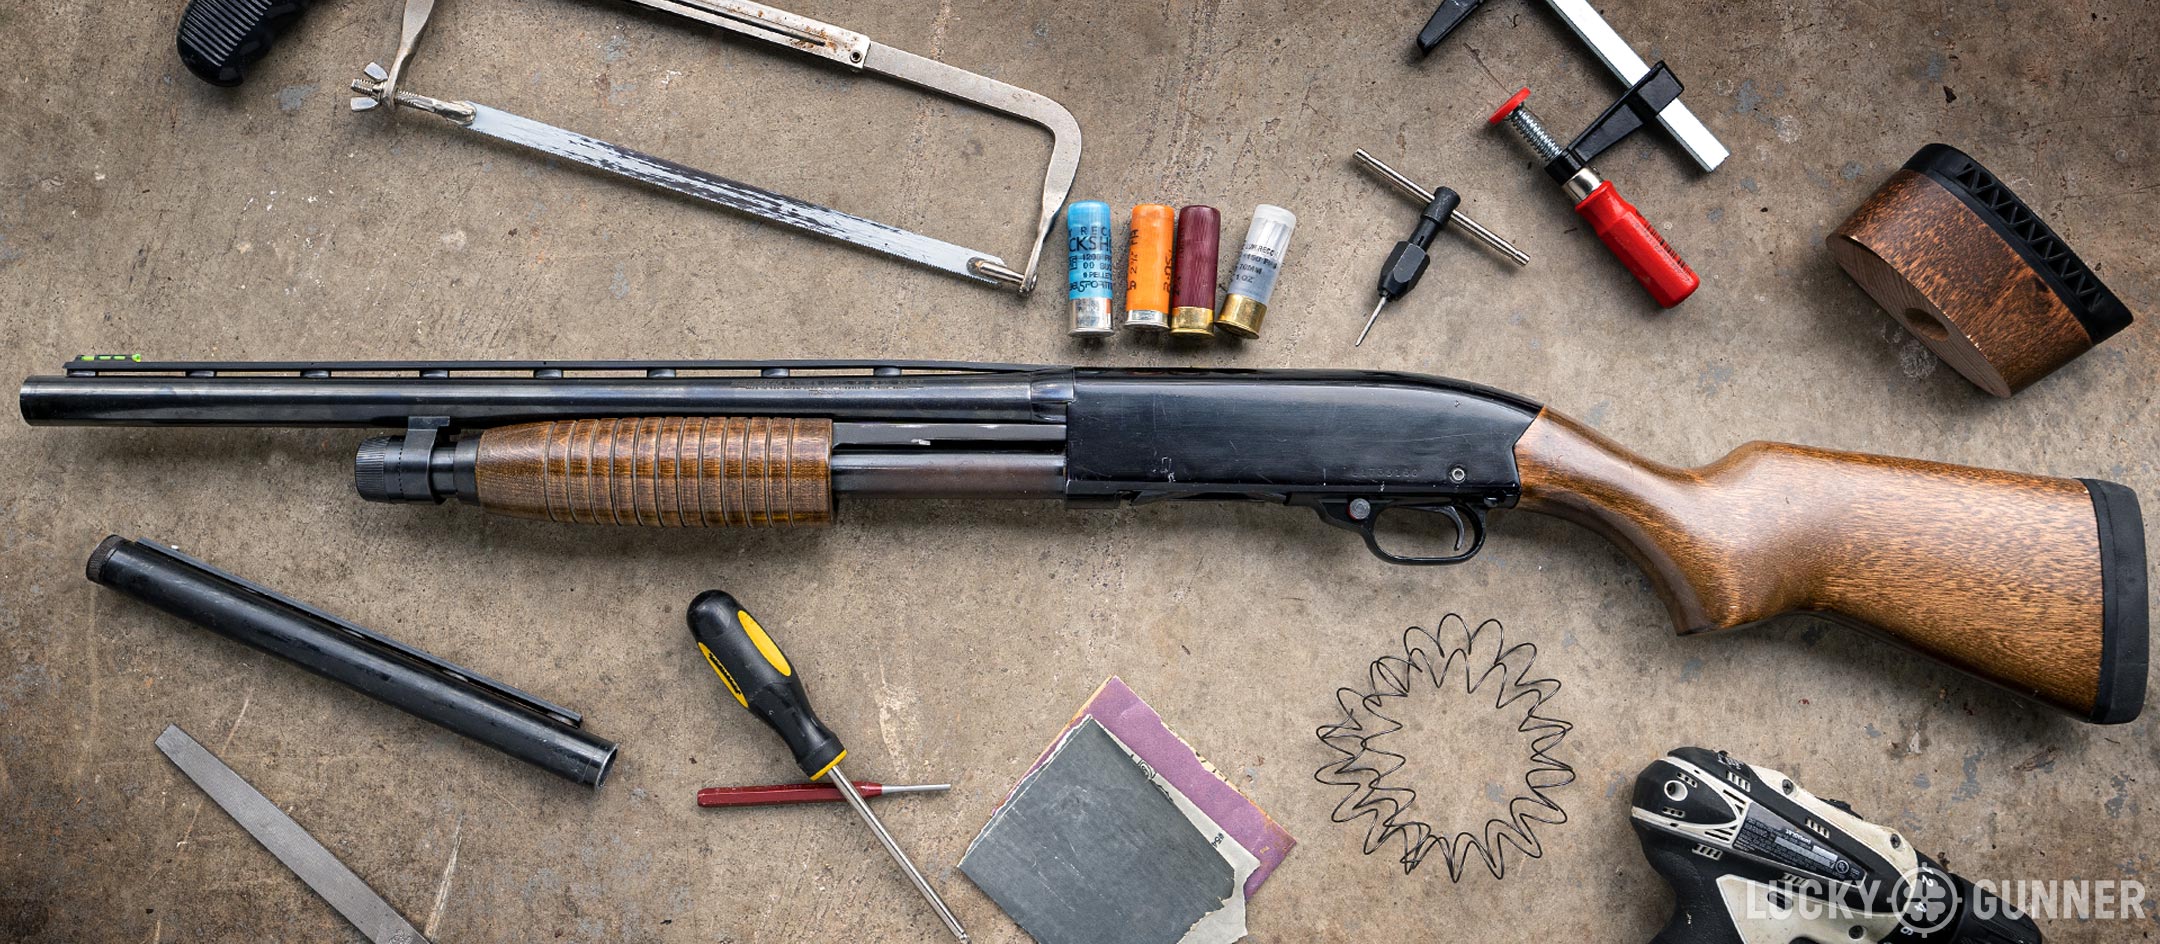 remington 870 shotgun home defense